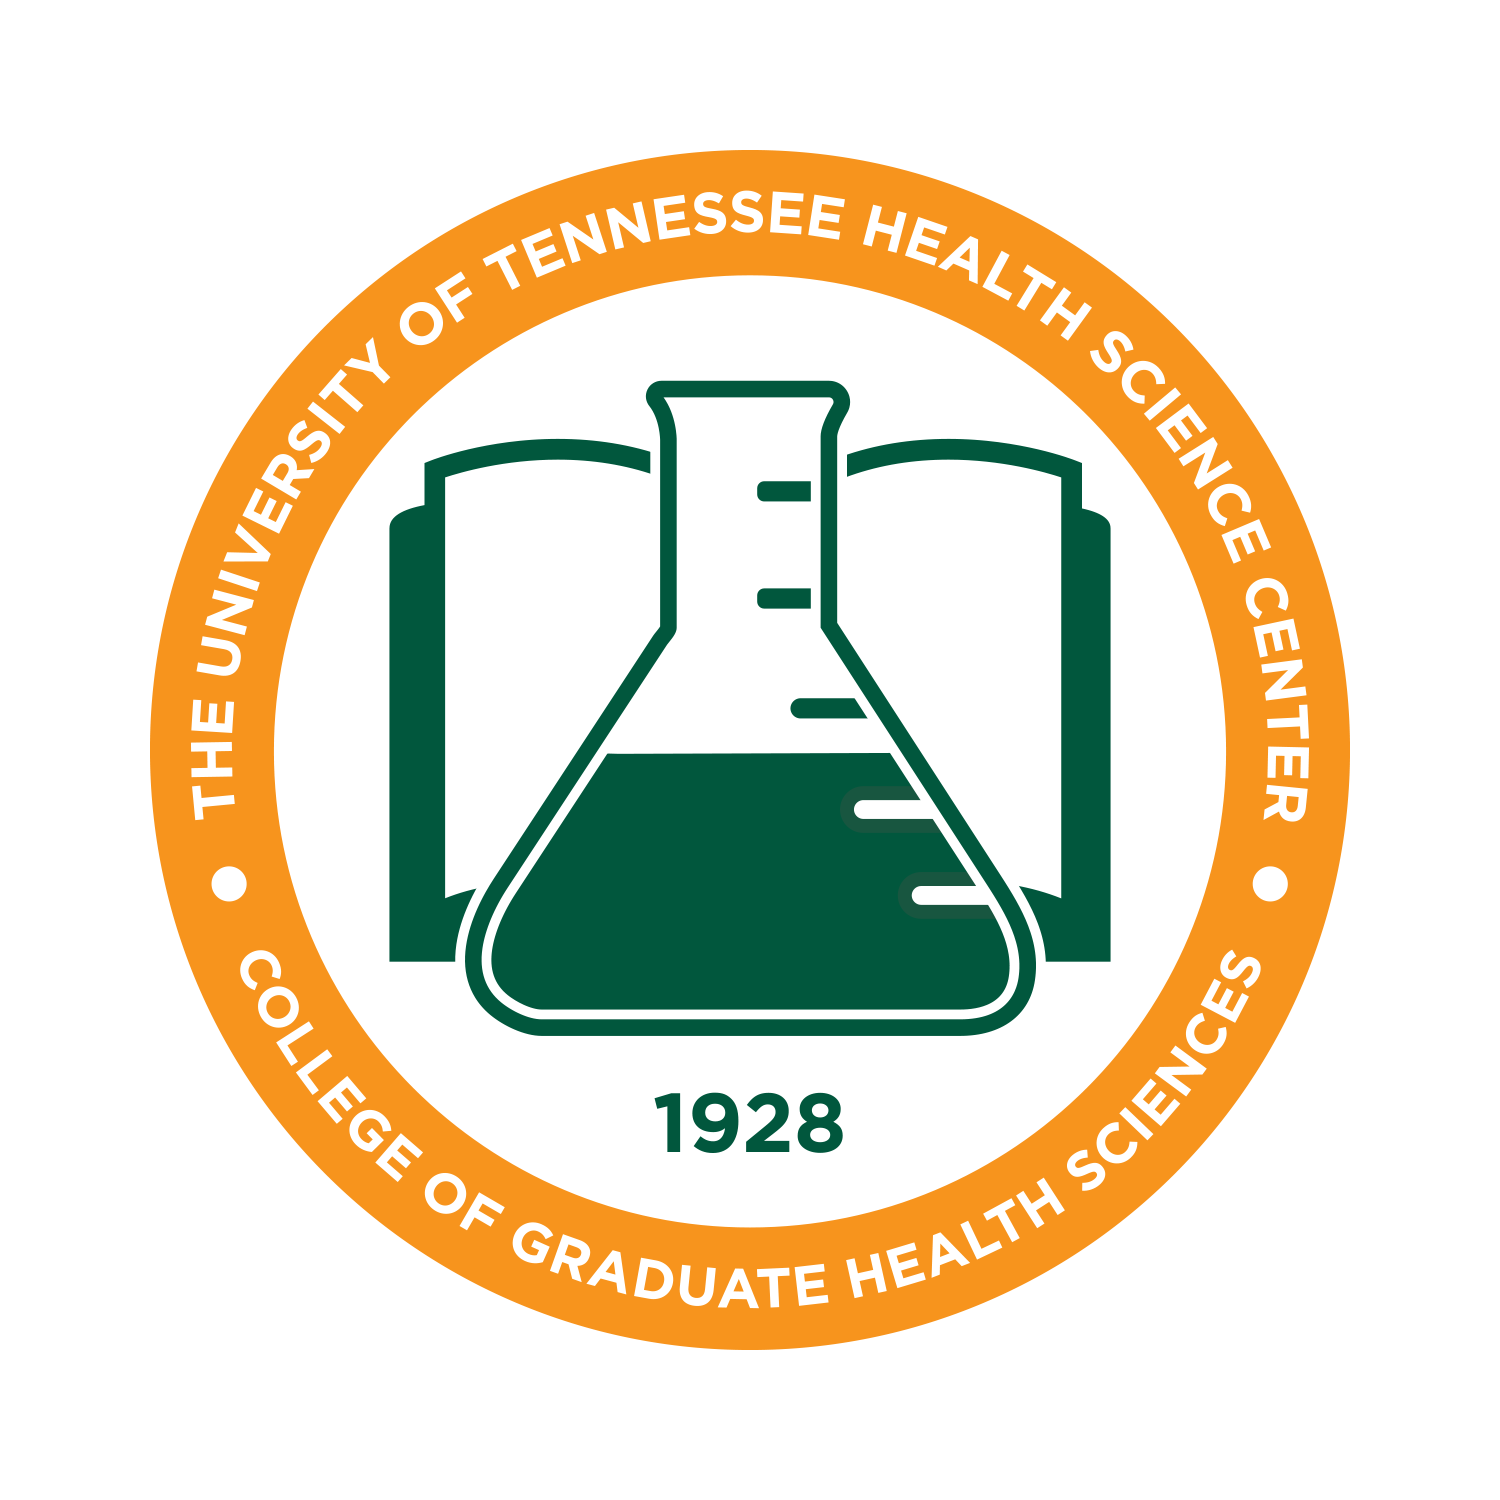 College of Graduate Health Sciences Seal